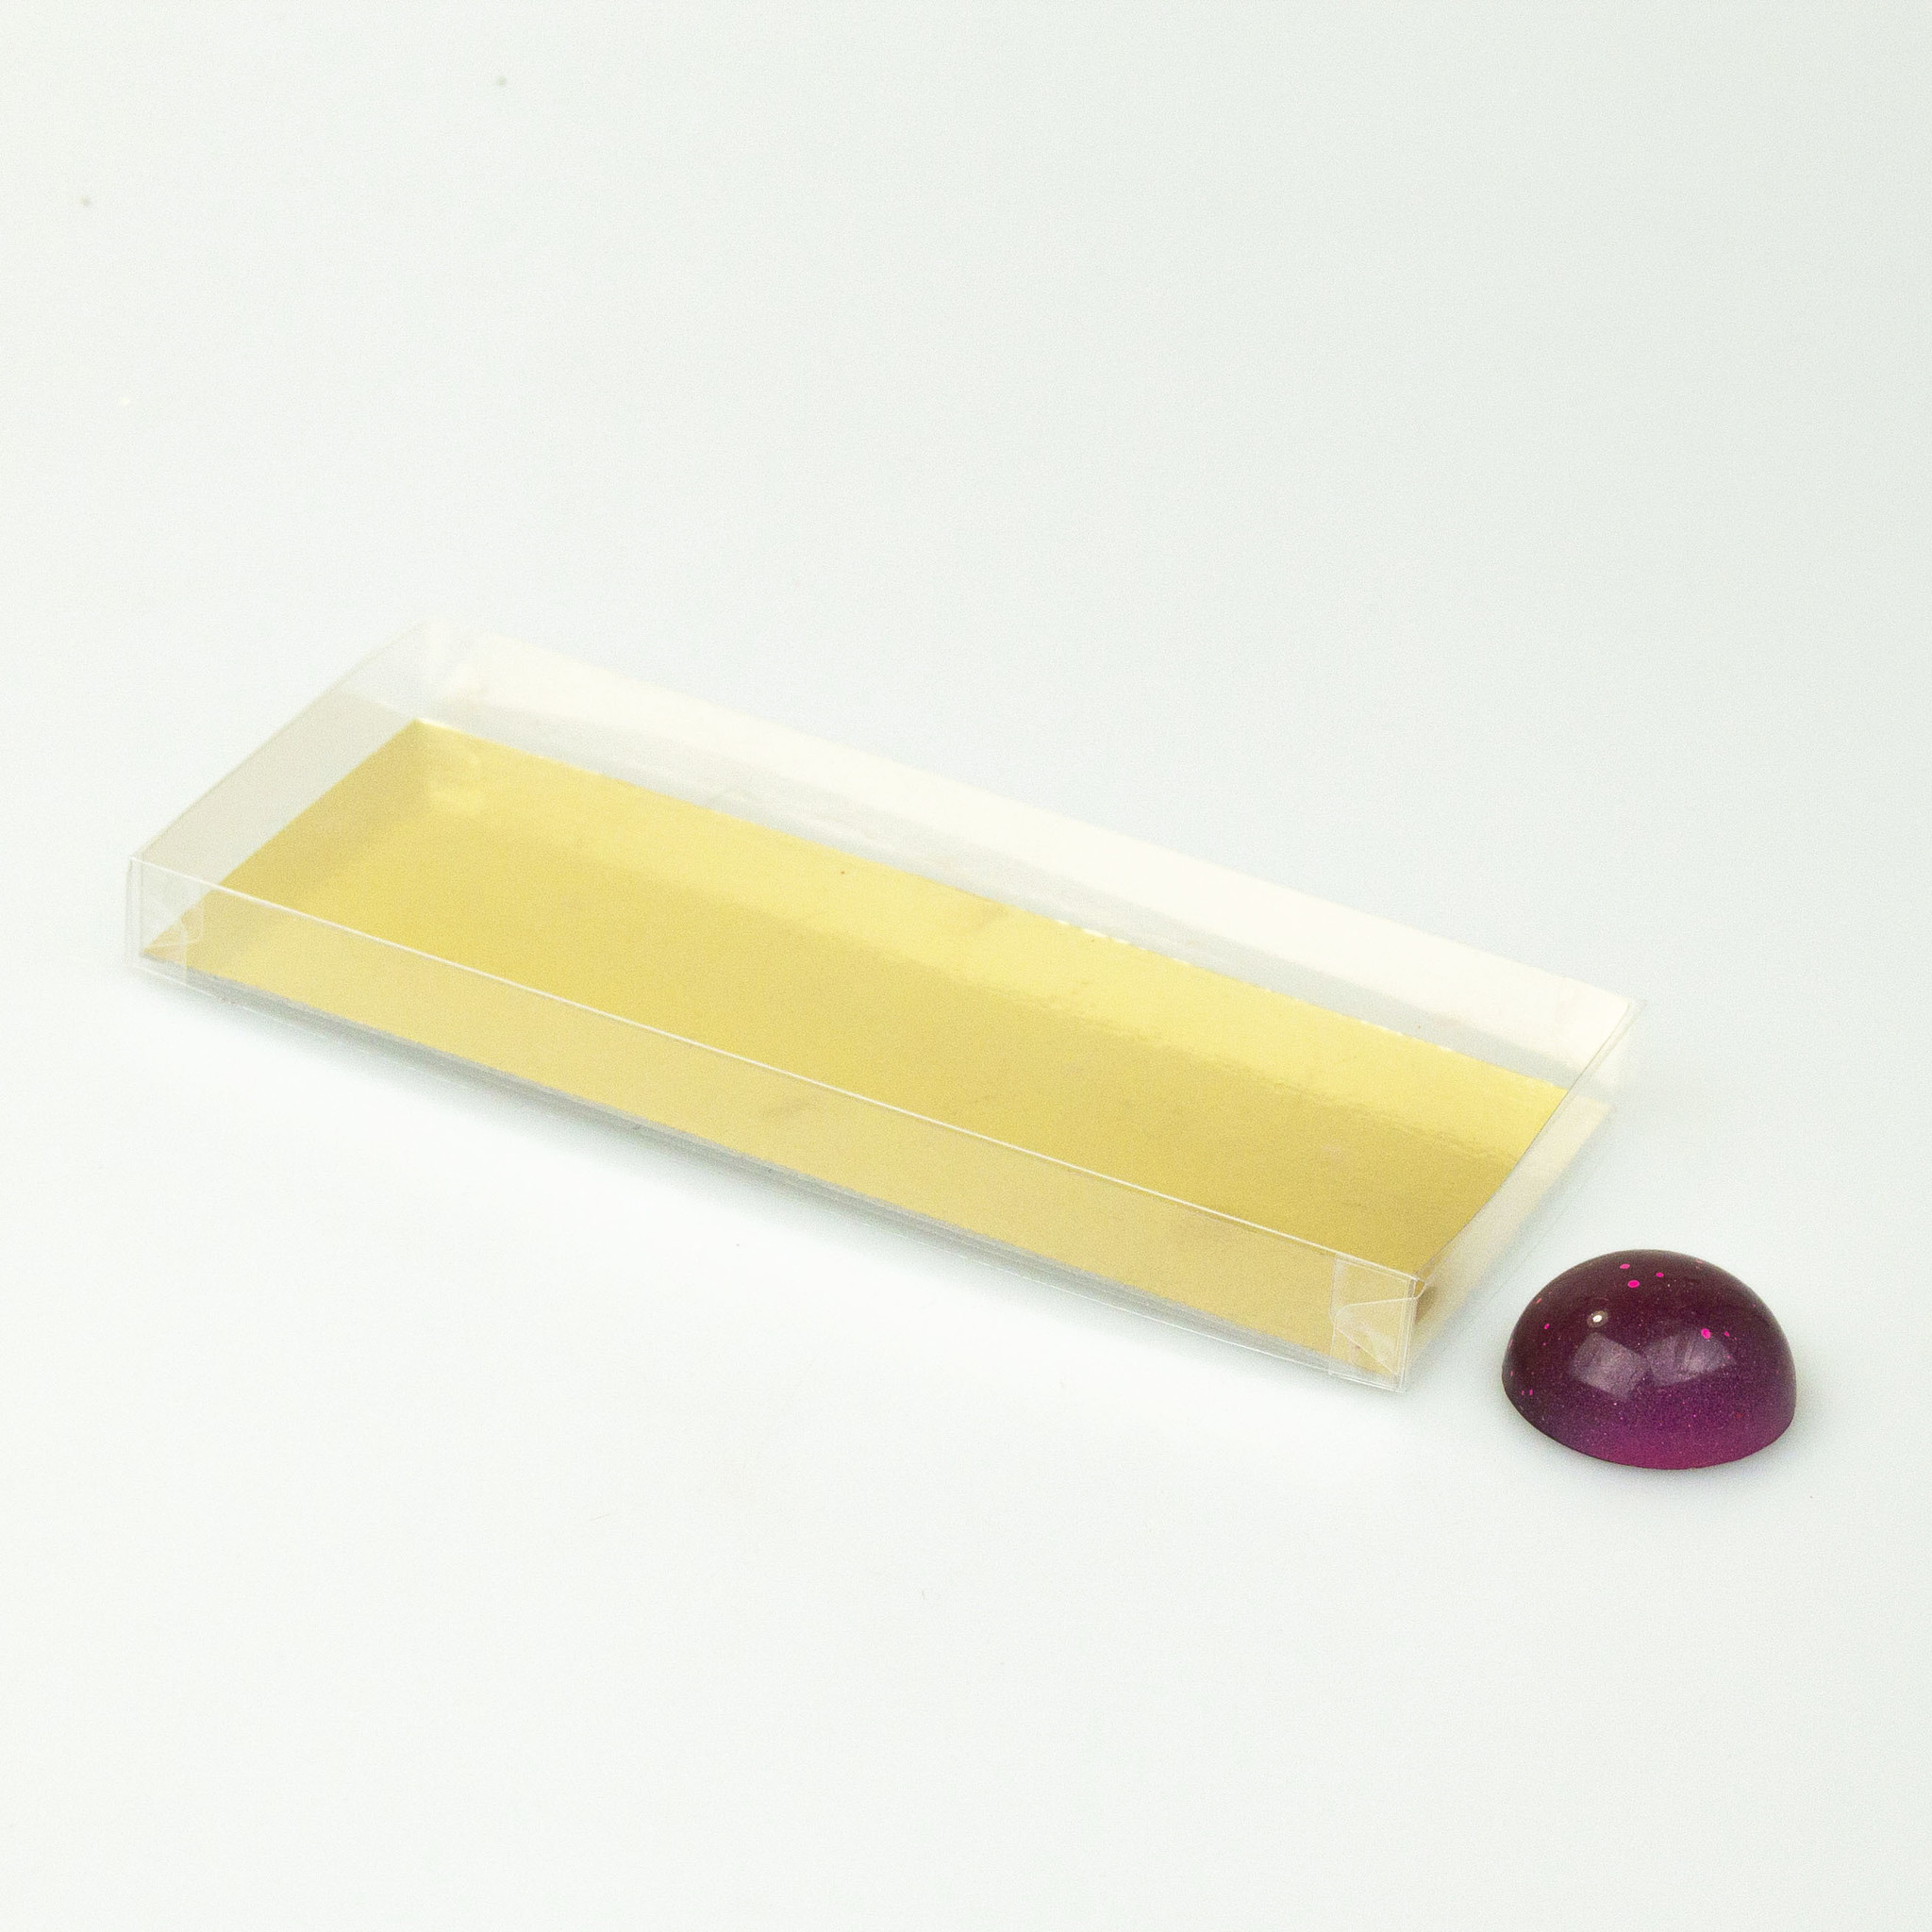 Boîte transparente avec carton doré - 175* 70*15mm - 50 pièces